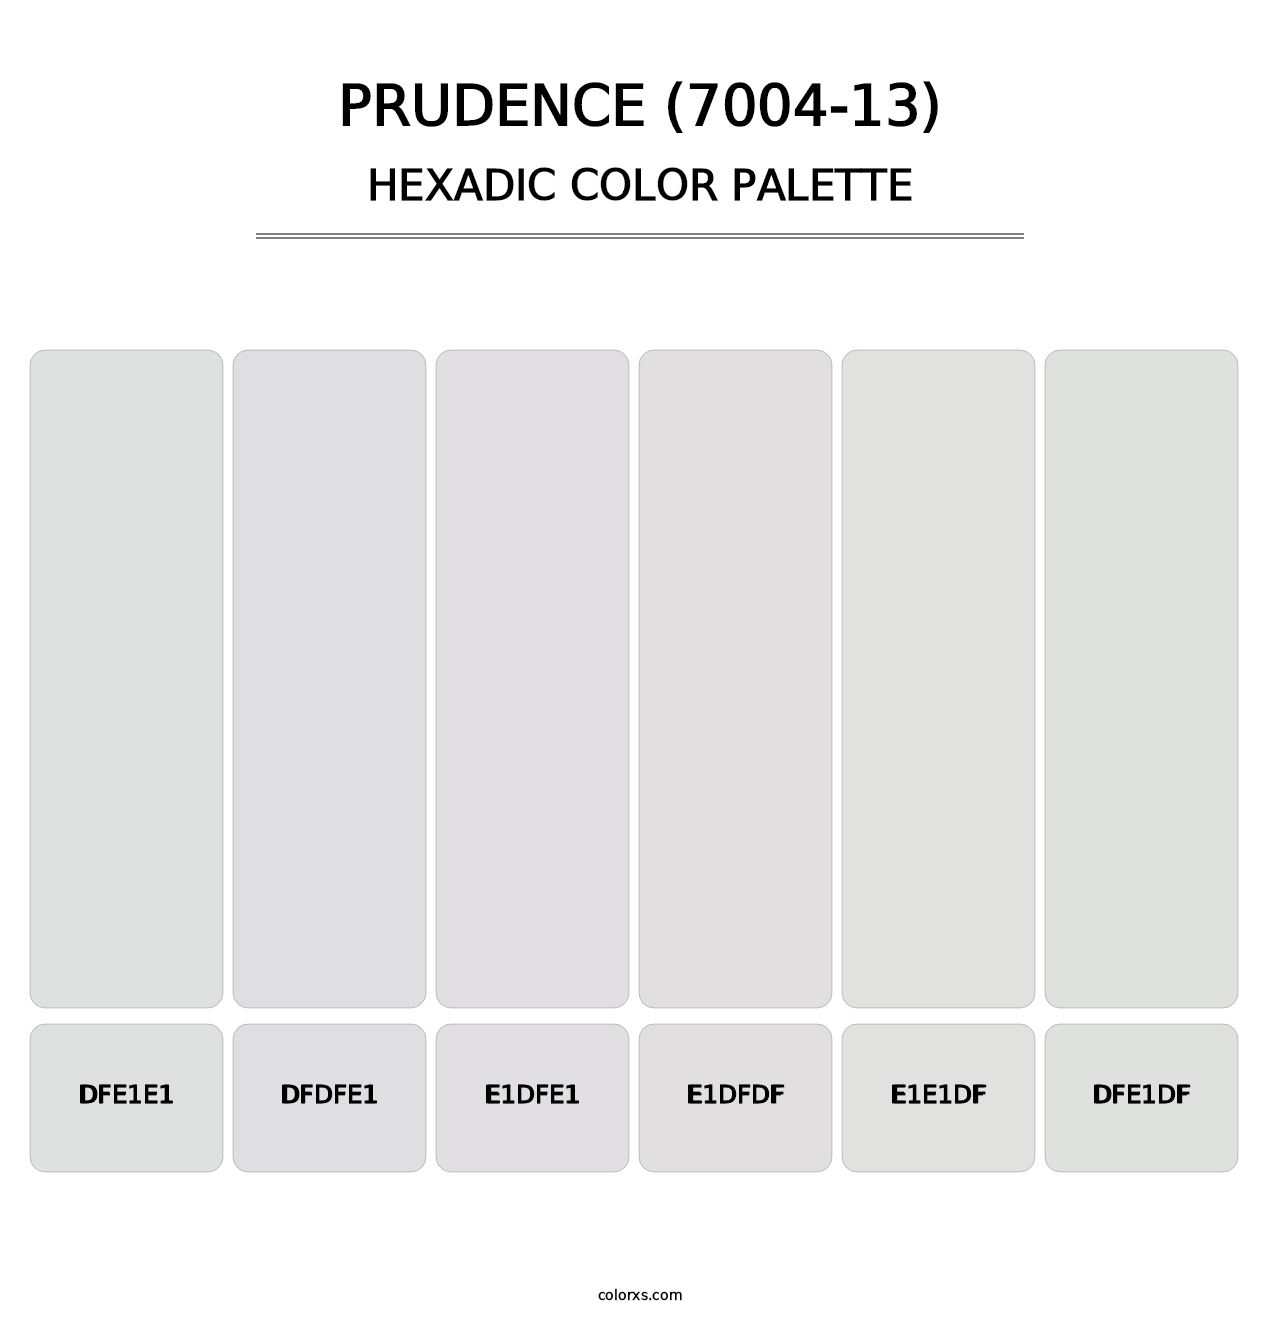 Prudence (7004-13) - Hexadic Color Palette